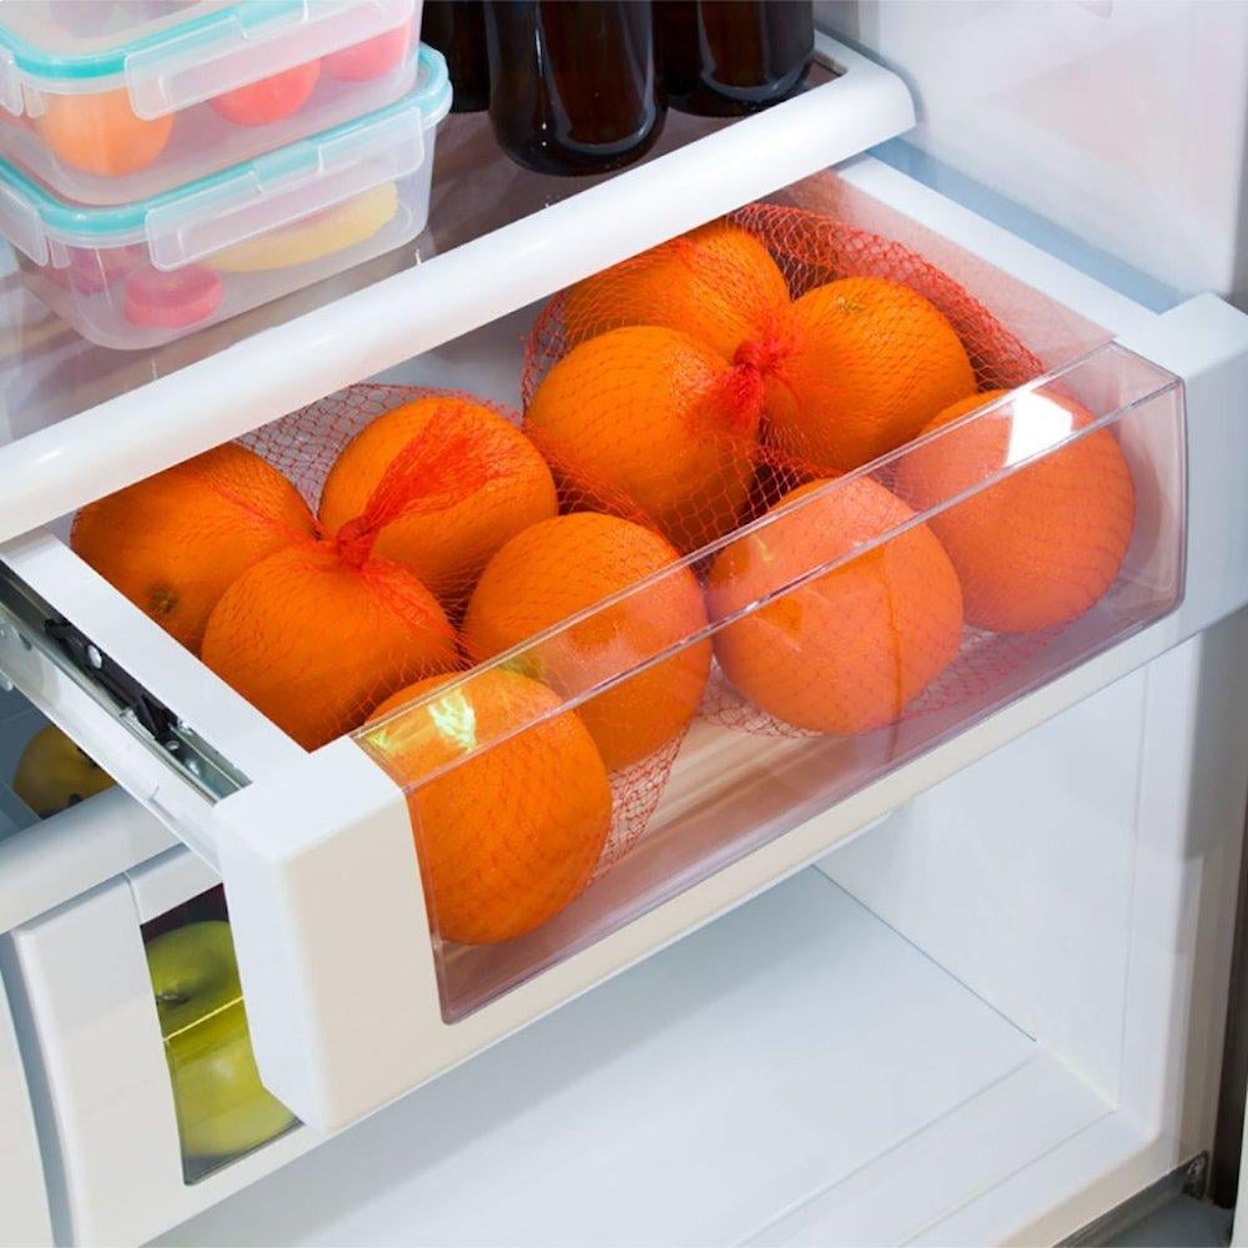 Marvel Industries Refrigerators Bottom Freezer Built In Refrigerator